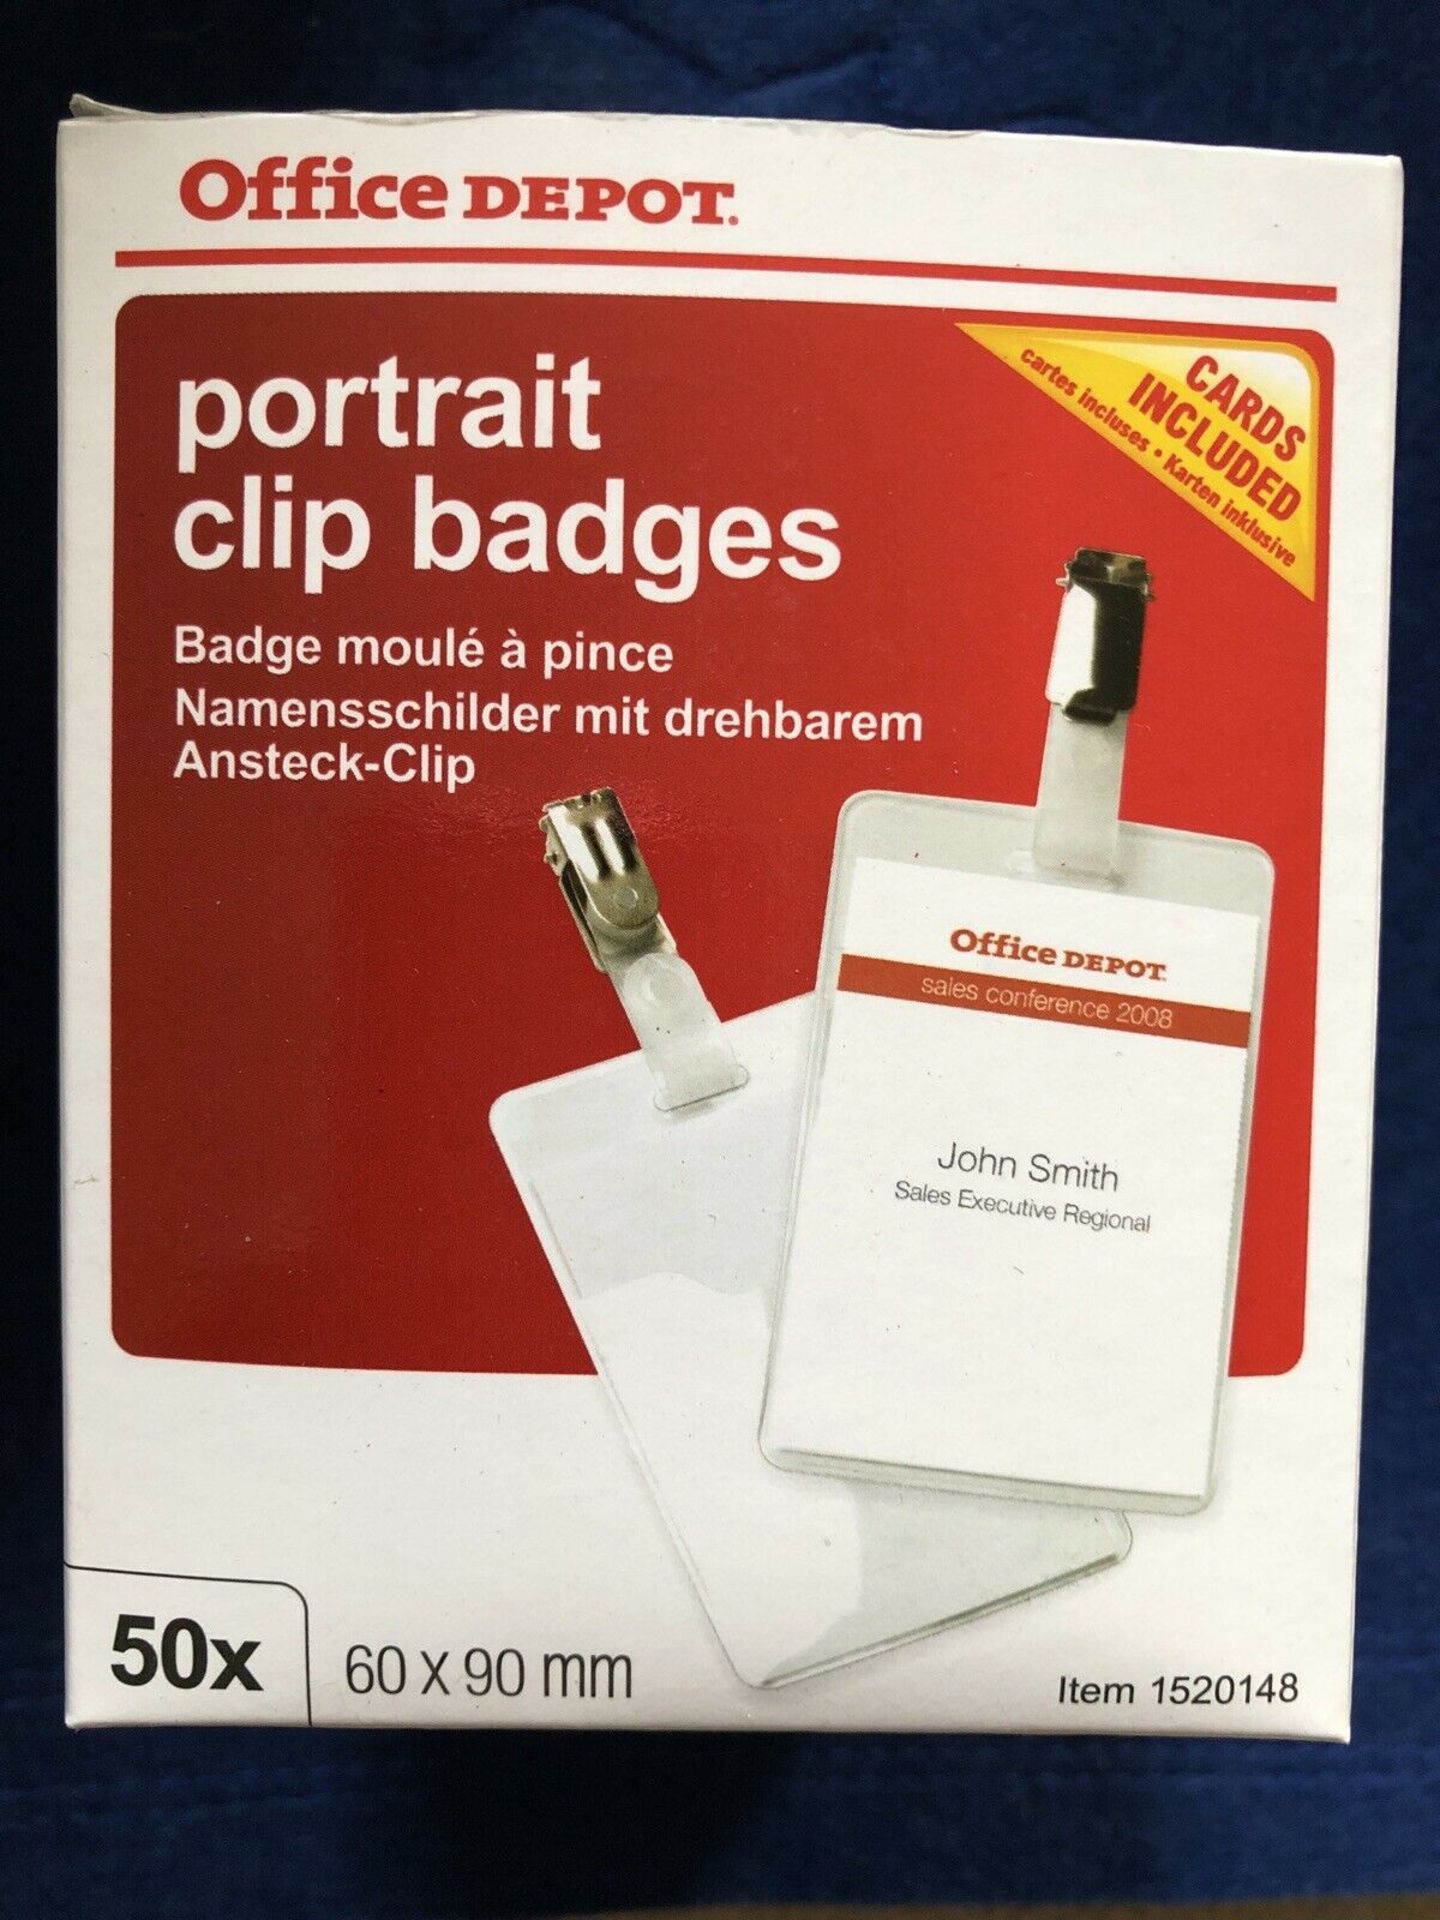 Portrait Clips Id Badge Clear Card Portrait 60Mm X 90Mm 50 Per Pack - 8 Units Per Lot